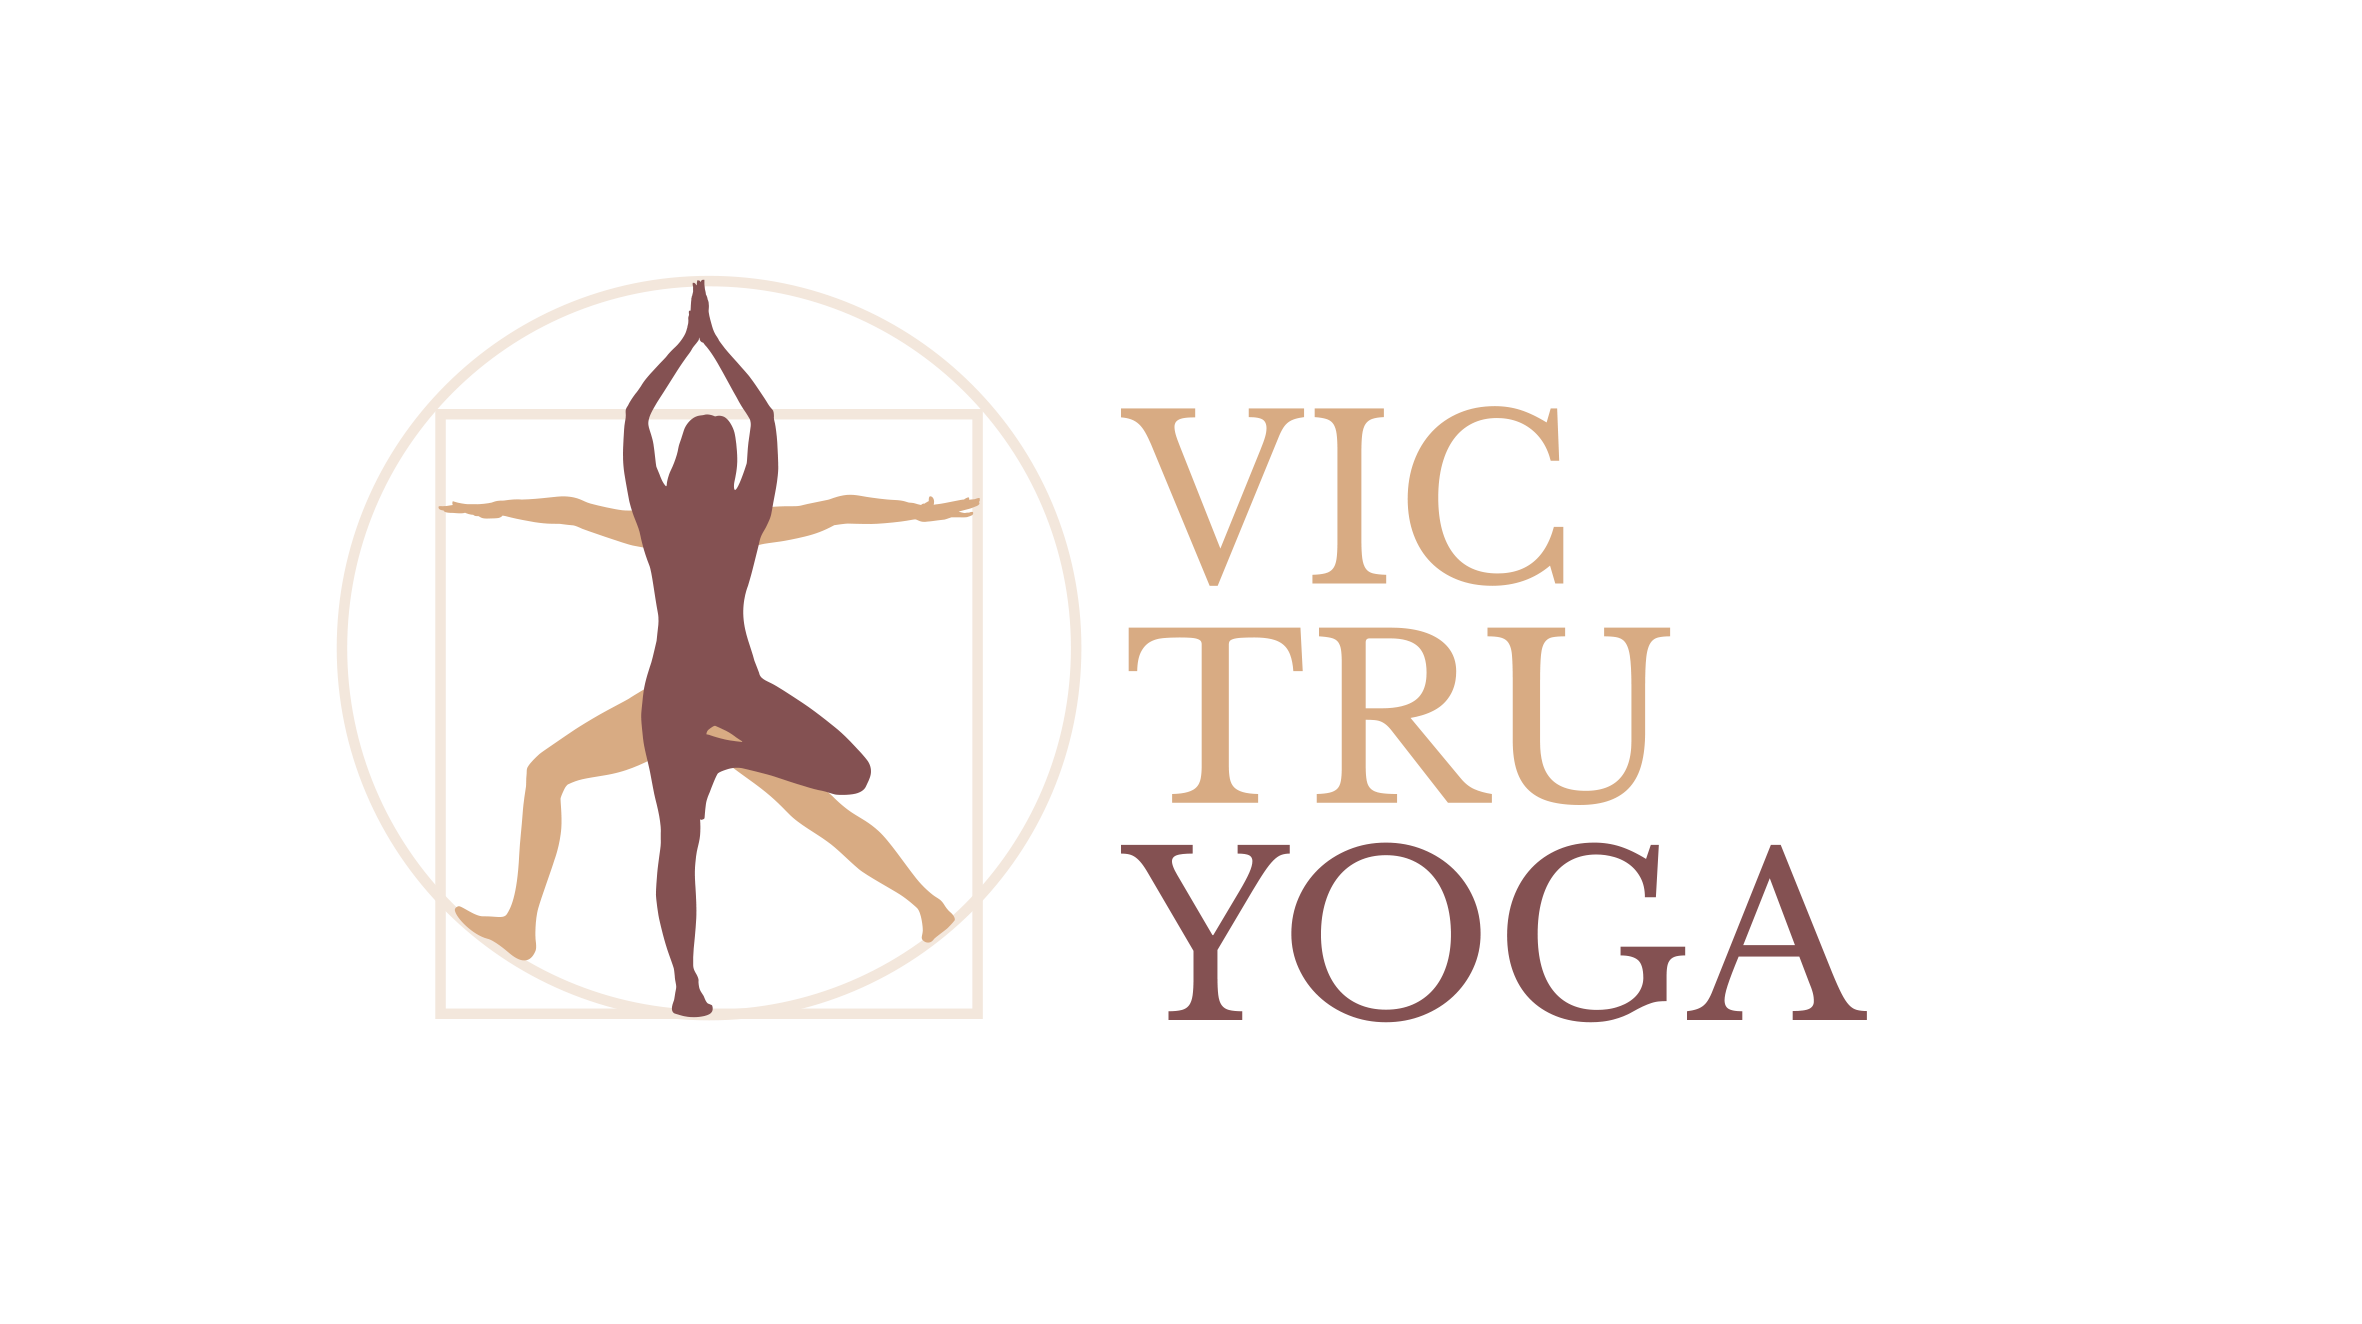 victruyoga logo